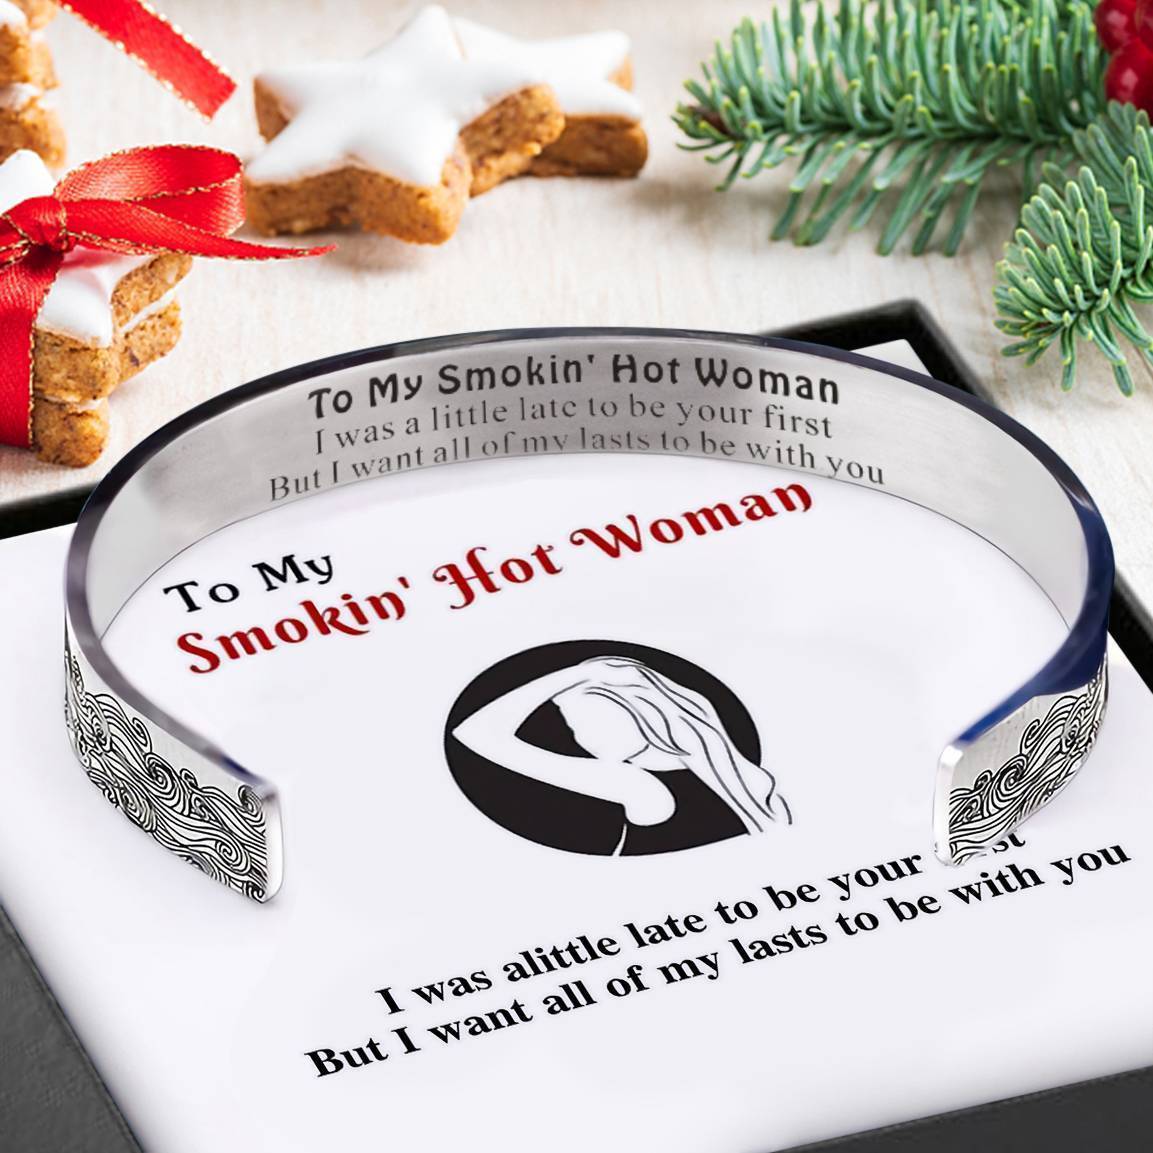 For Love - To My Smokin' Hot Woman Wave Cuff Bracelet